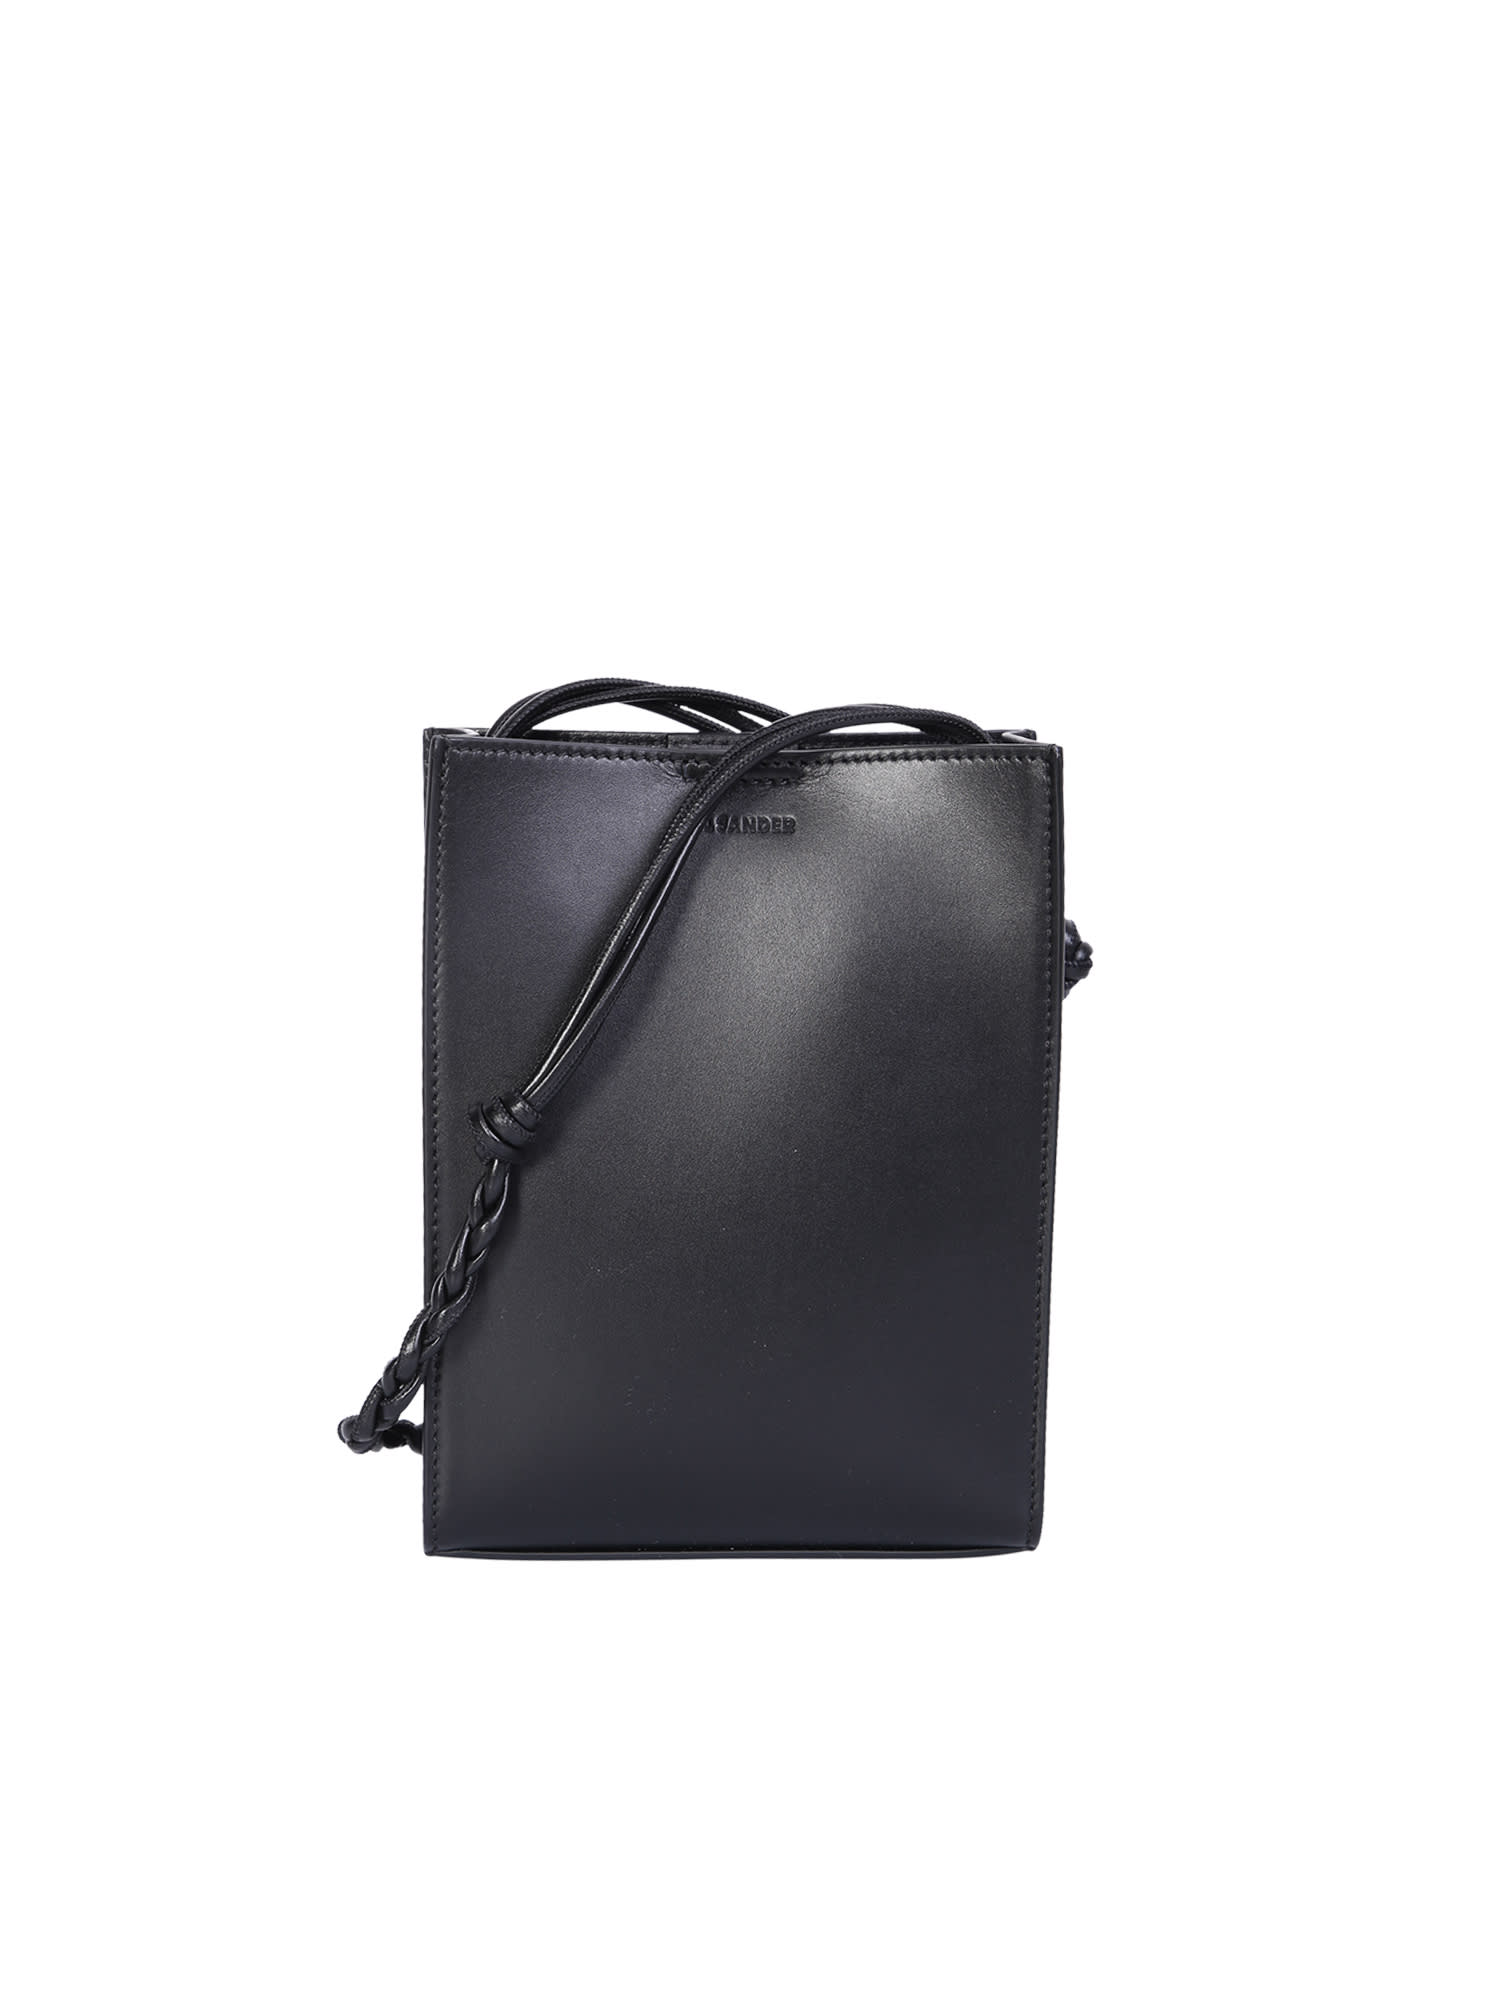 Jil Sander Black Tangle Sm Bag | ModeSens